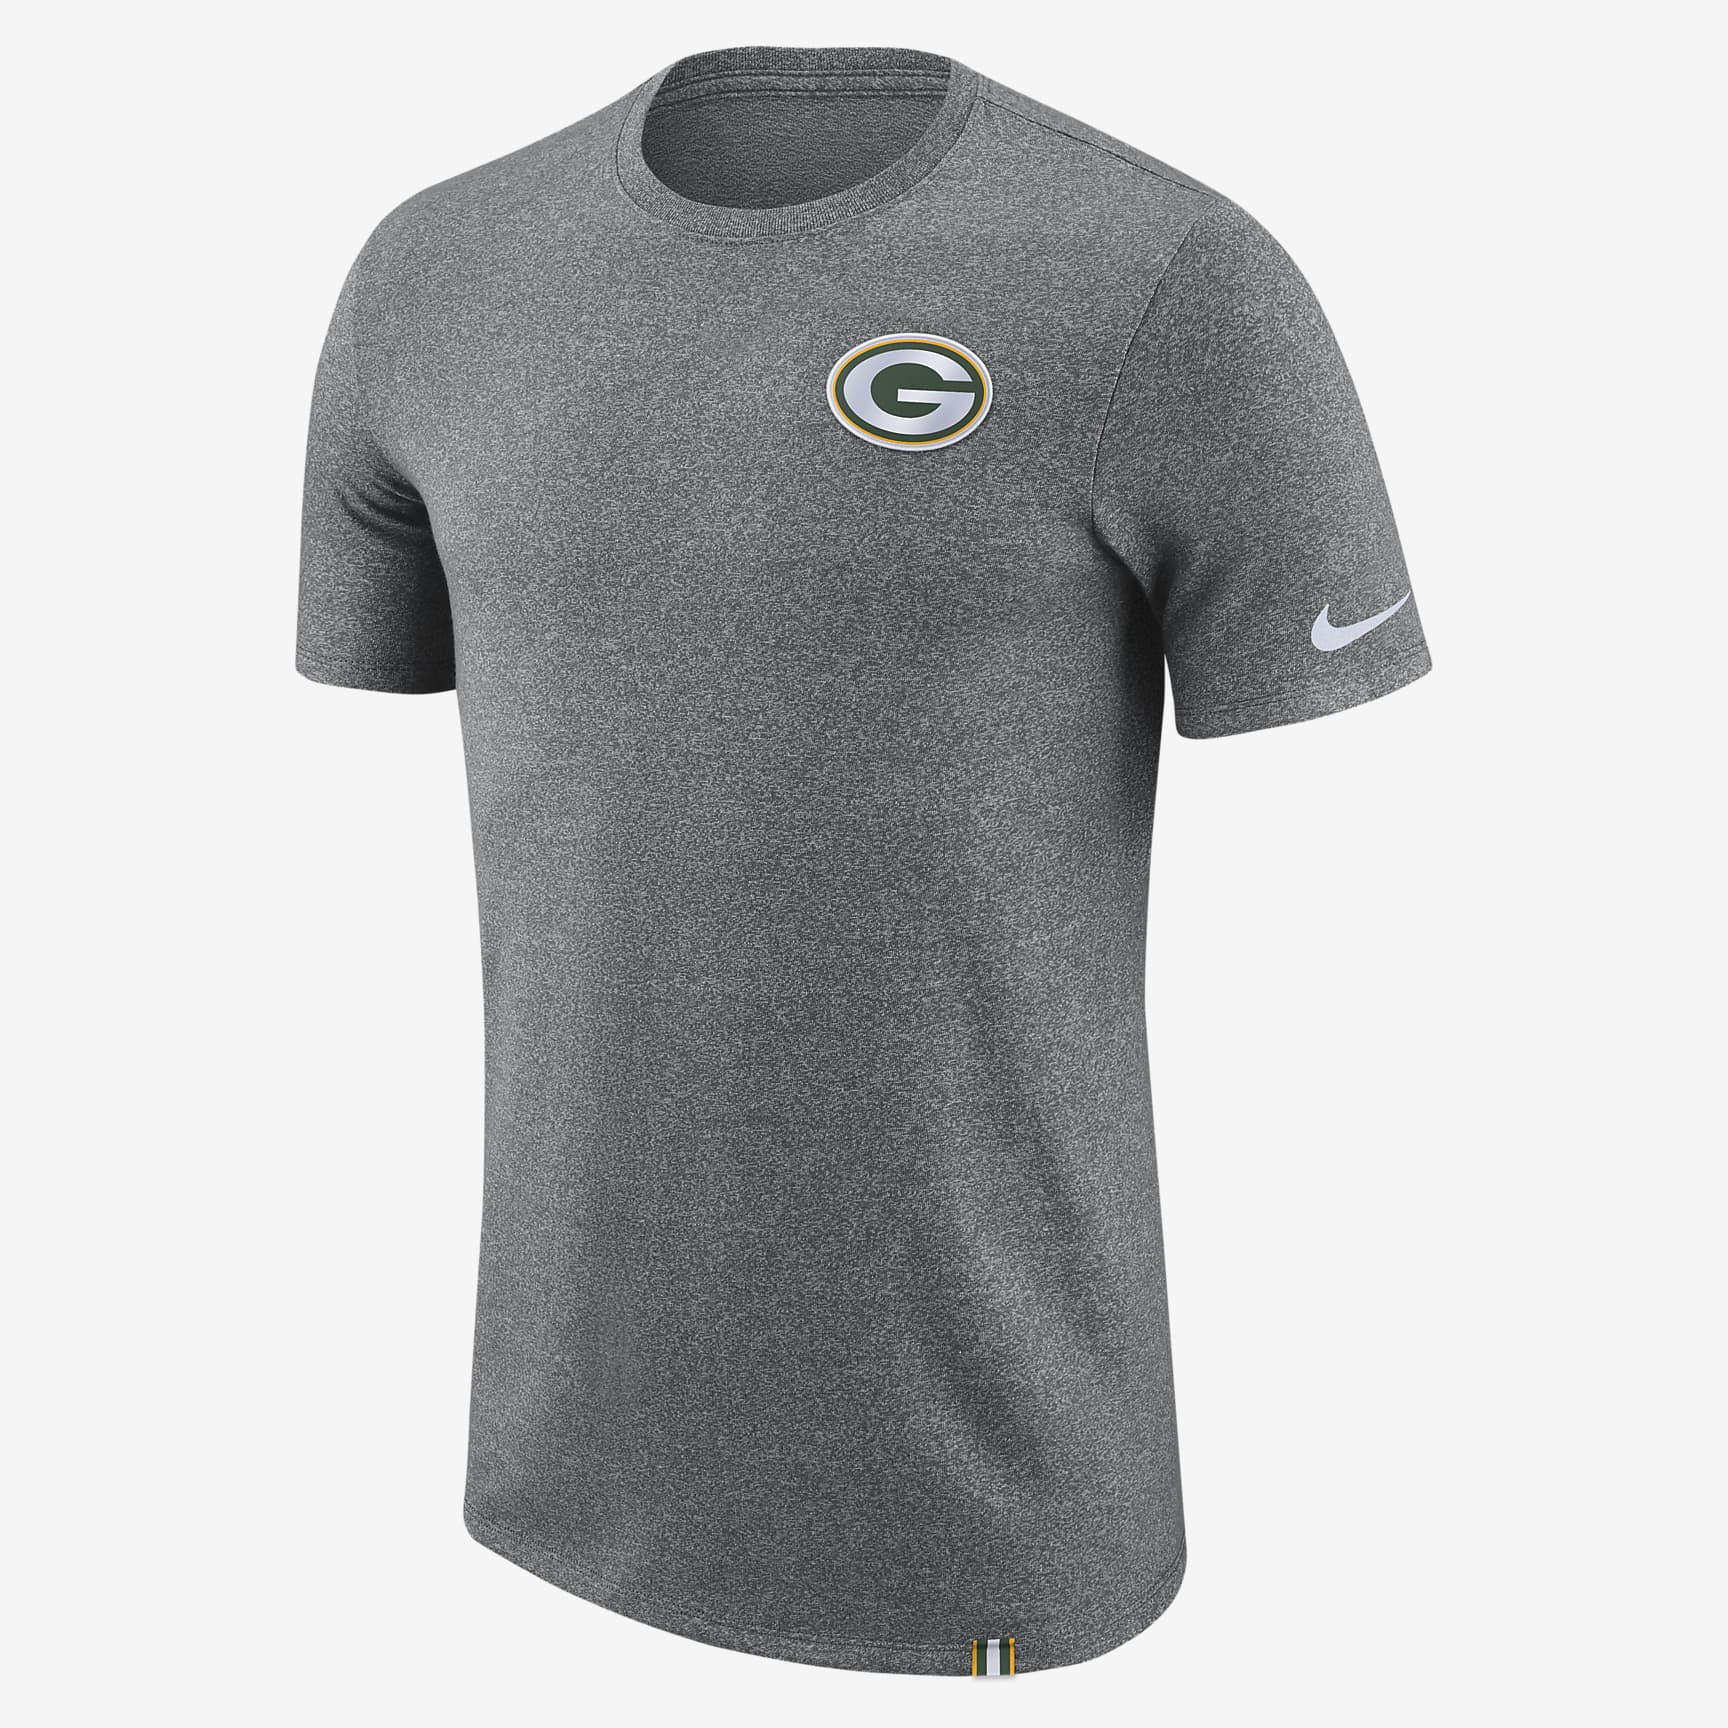 Nike Dry Marled Patch (NFL Packers) Men's T-Shirt. Nike BG